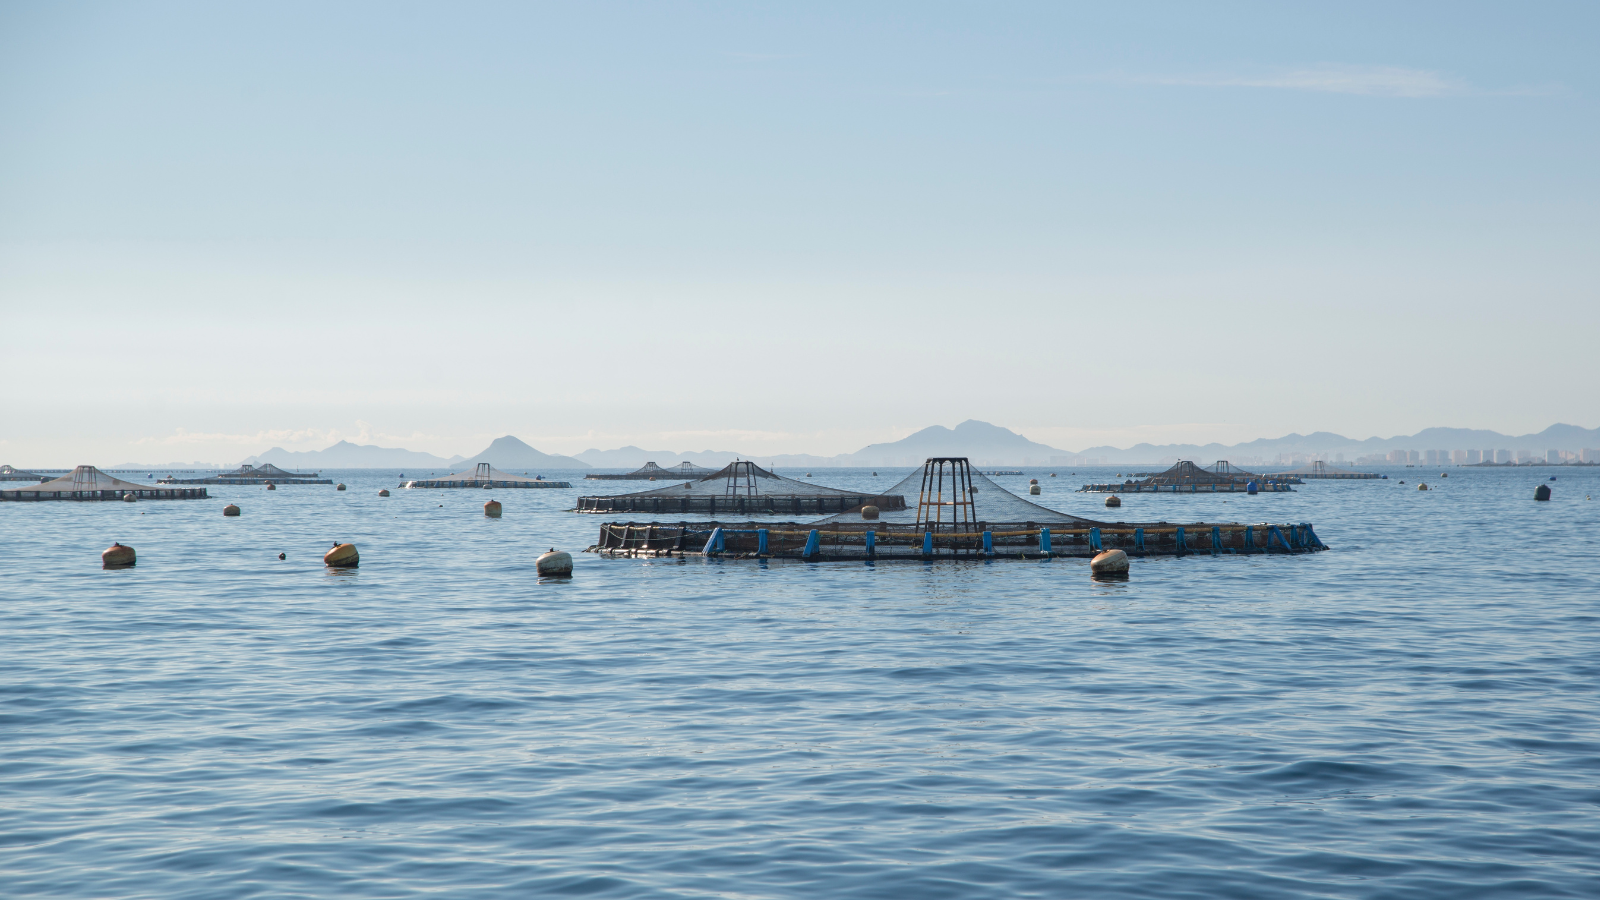 Ocean farming